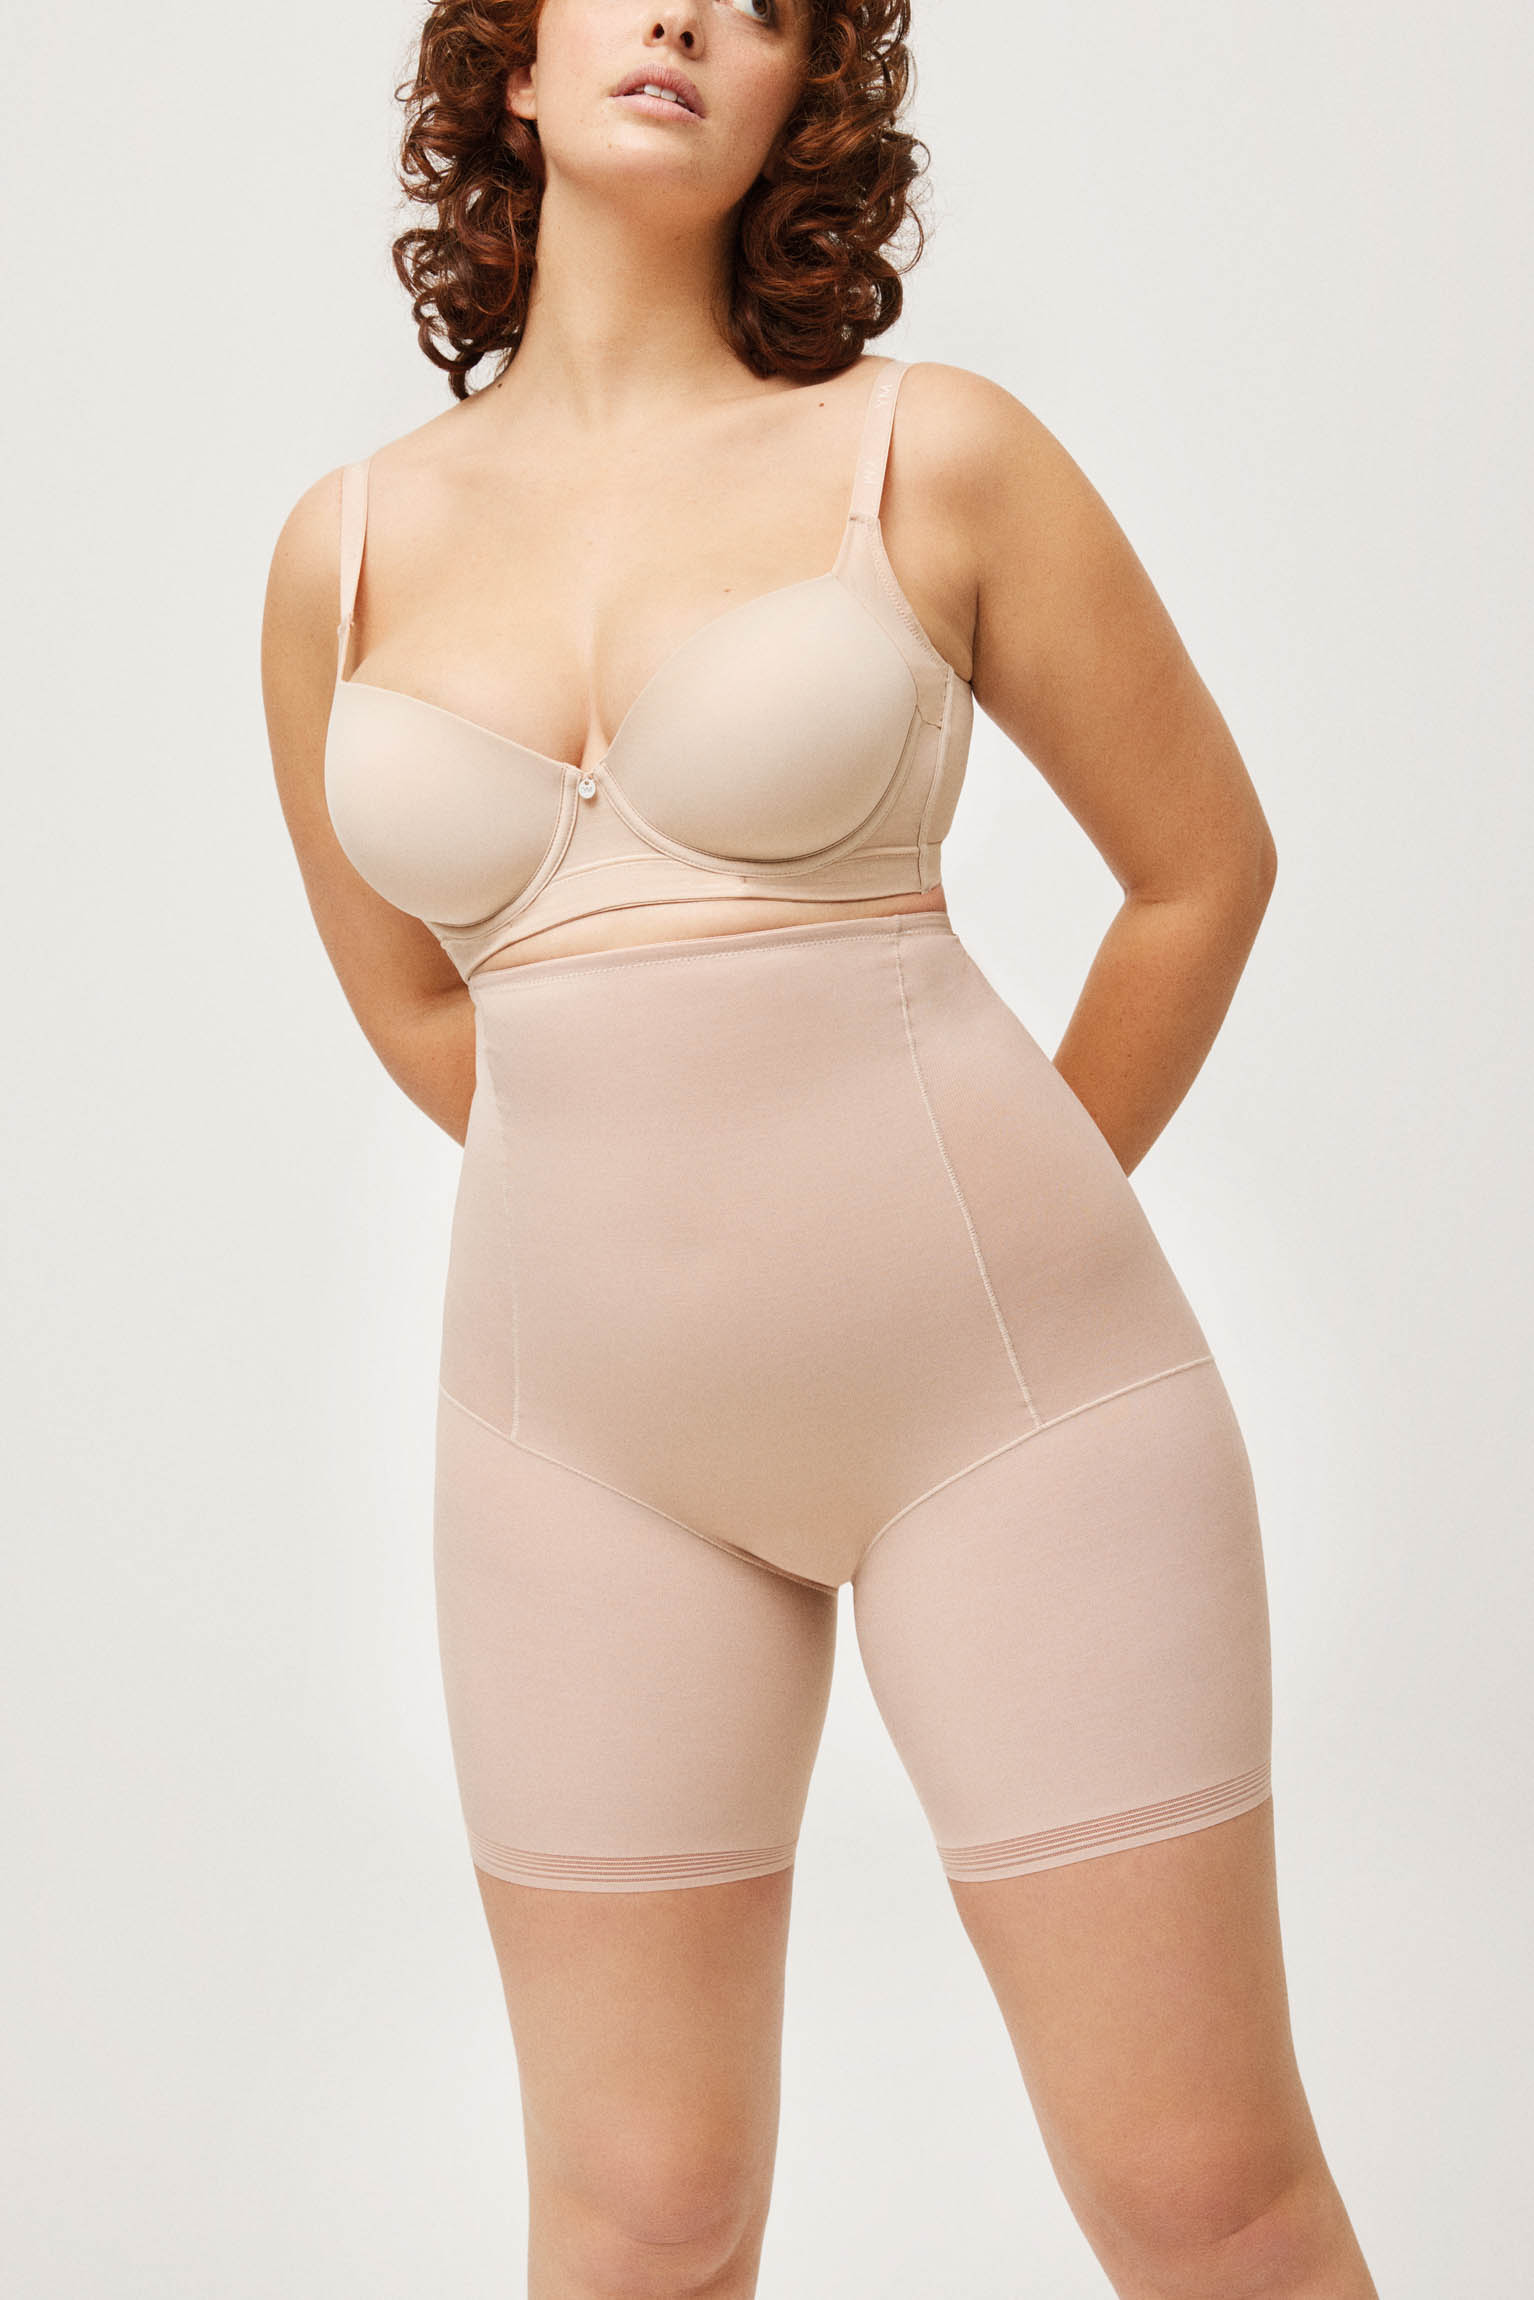 Wearing our strapless faja in nude, custom size XS waist/ 3XL hips